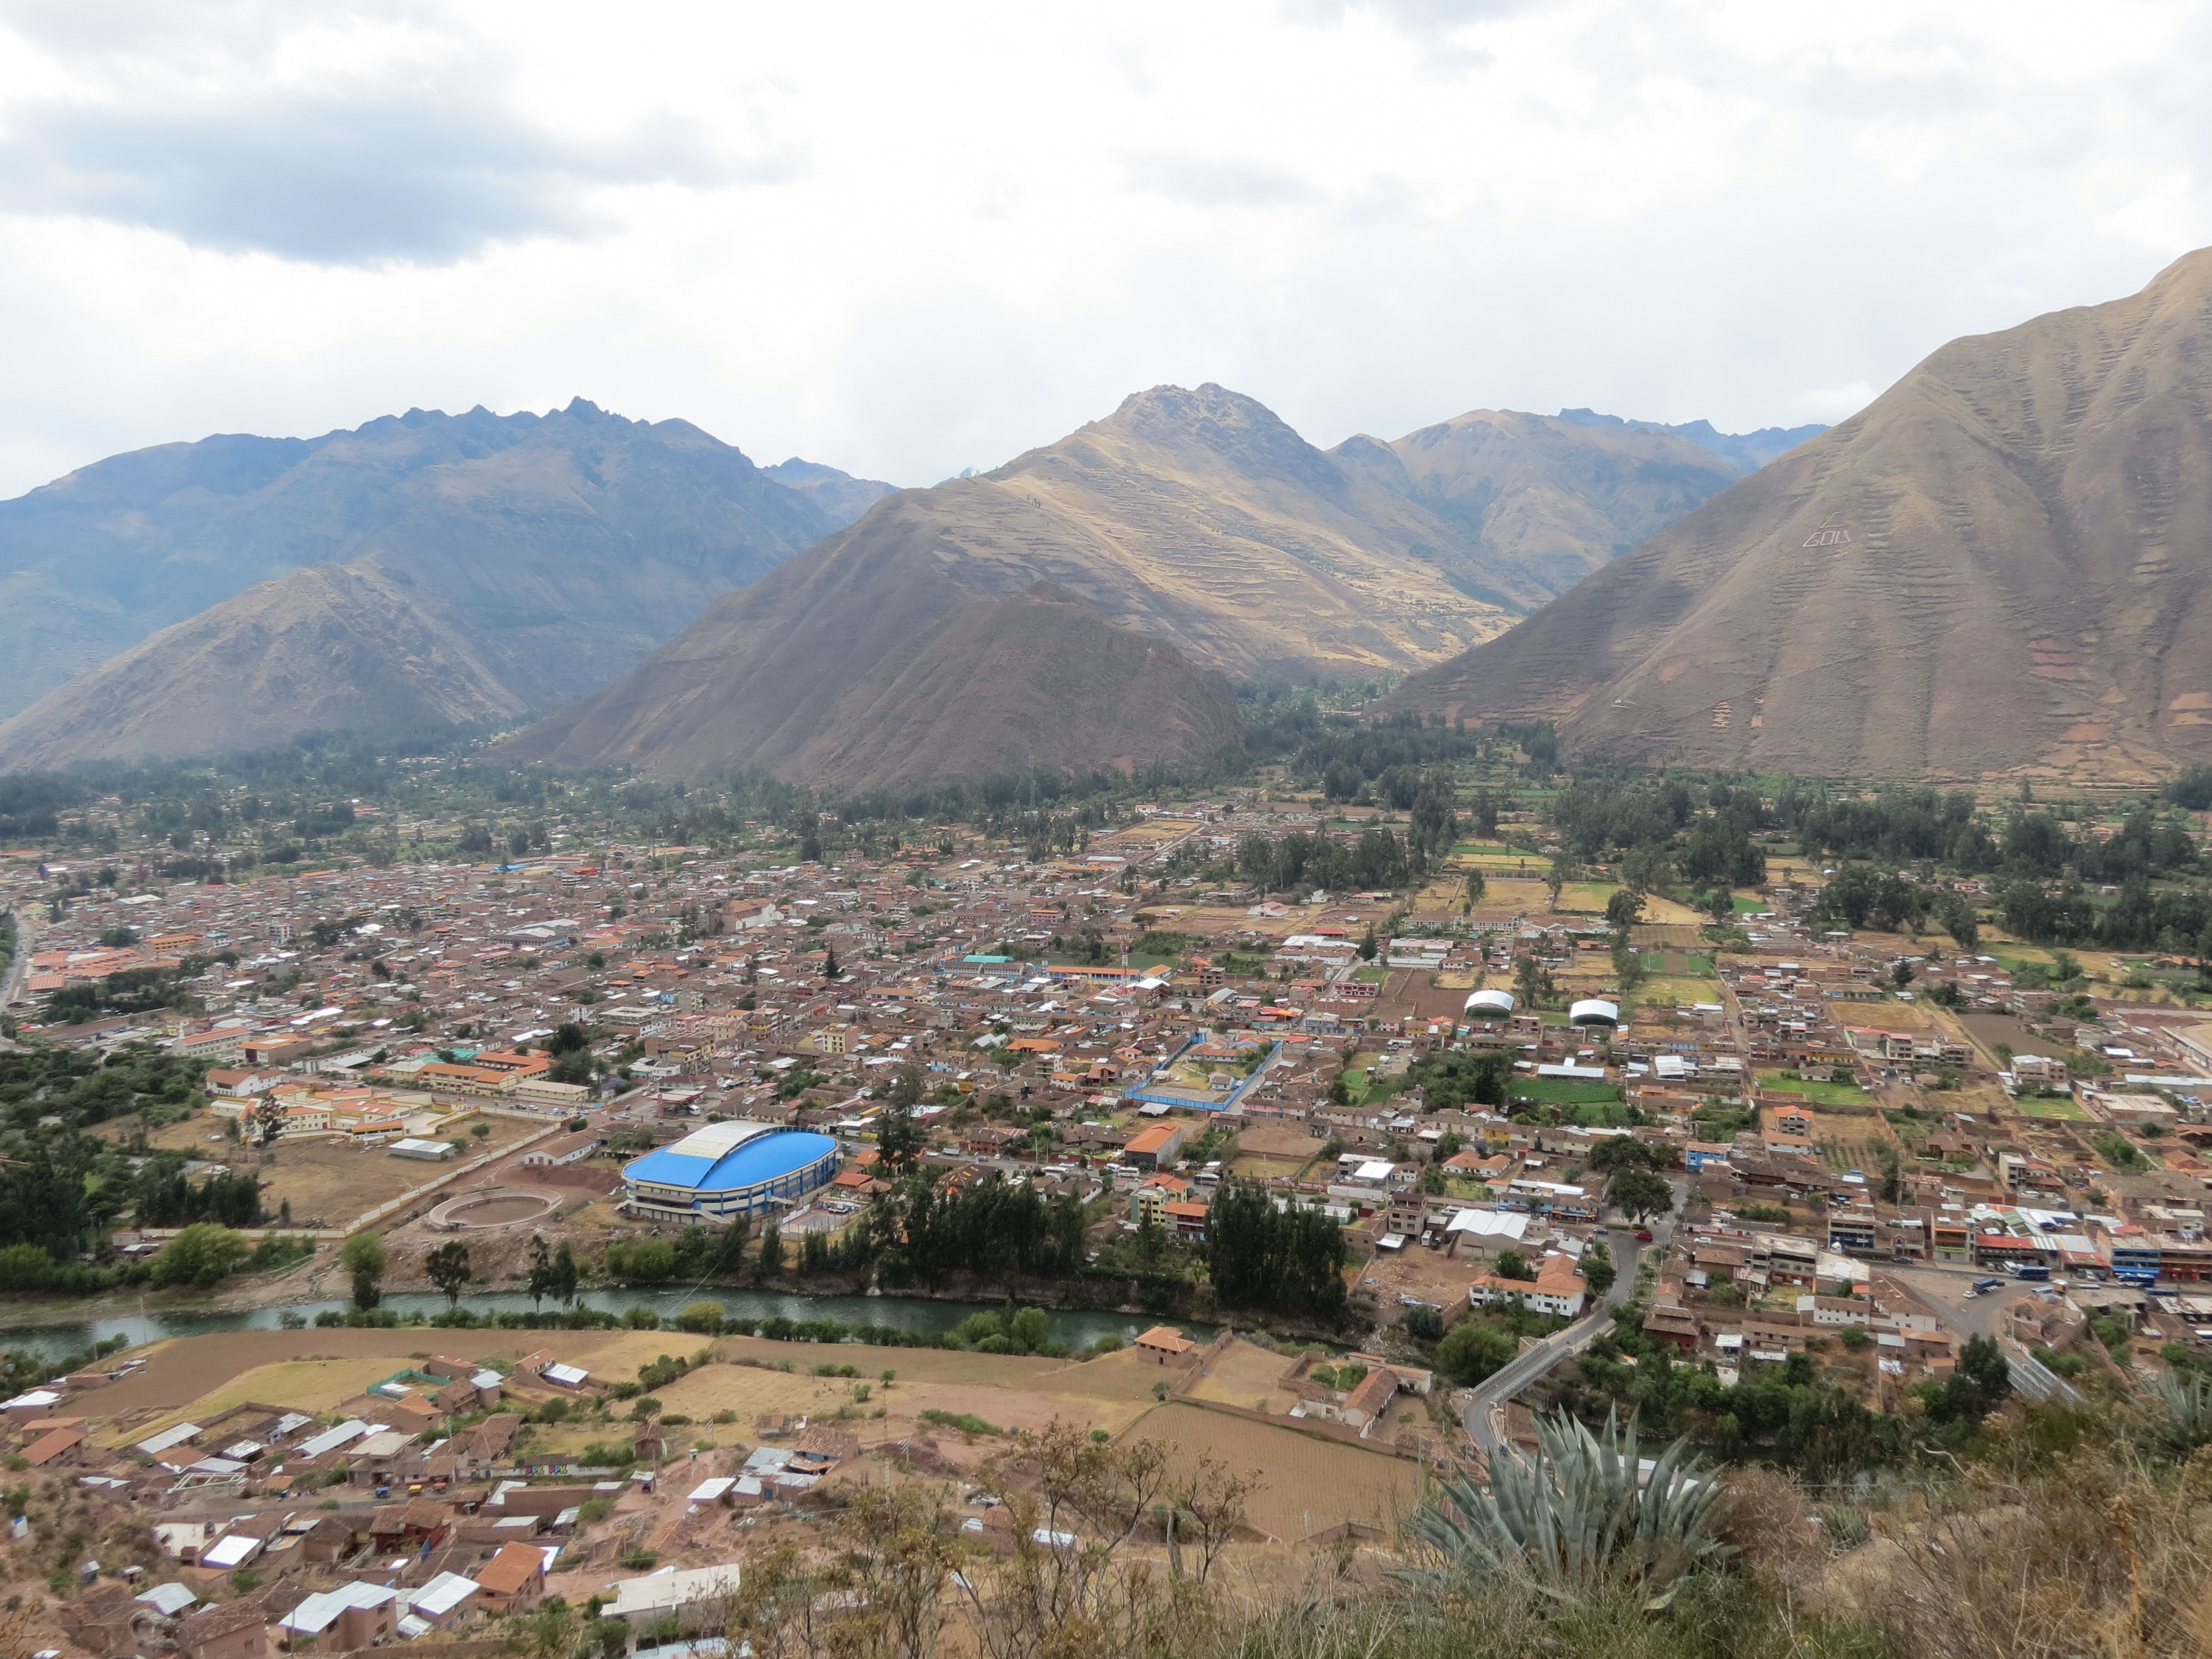 Day 5 - Machu Picchu back to Cusco